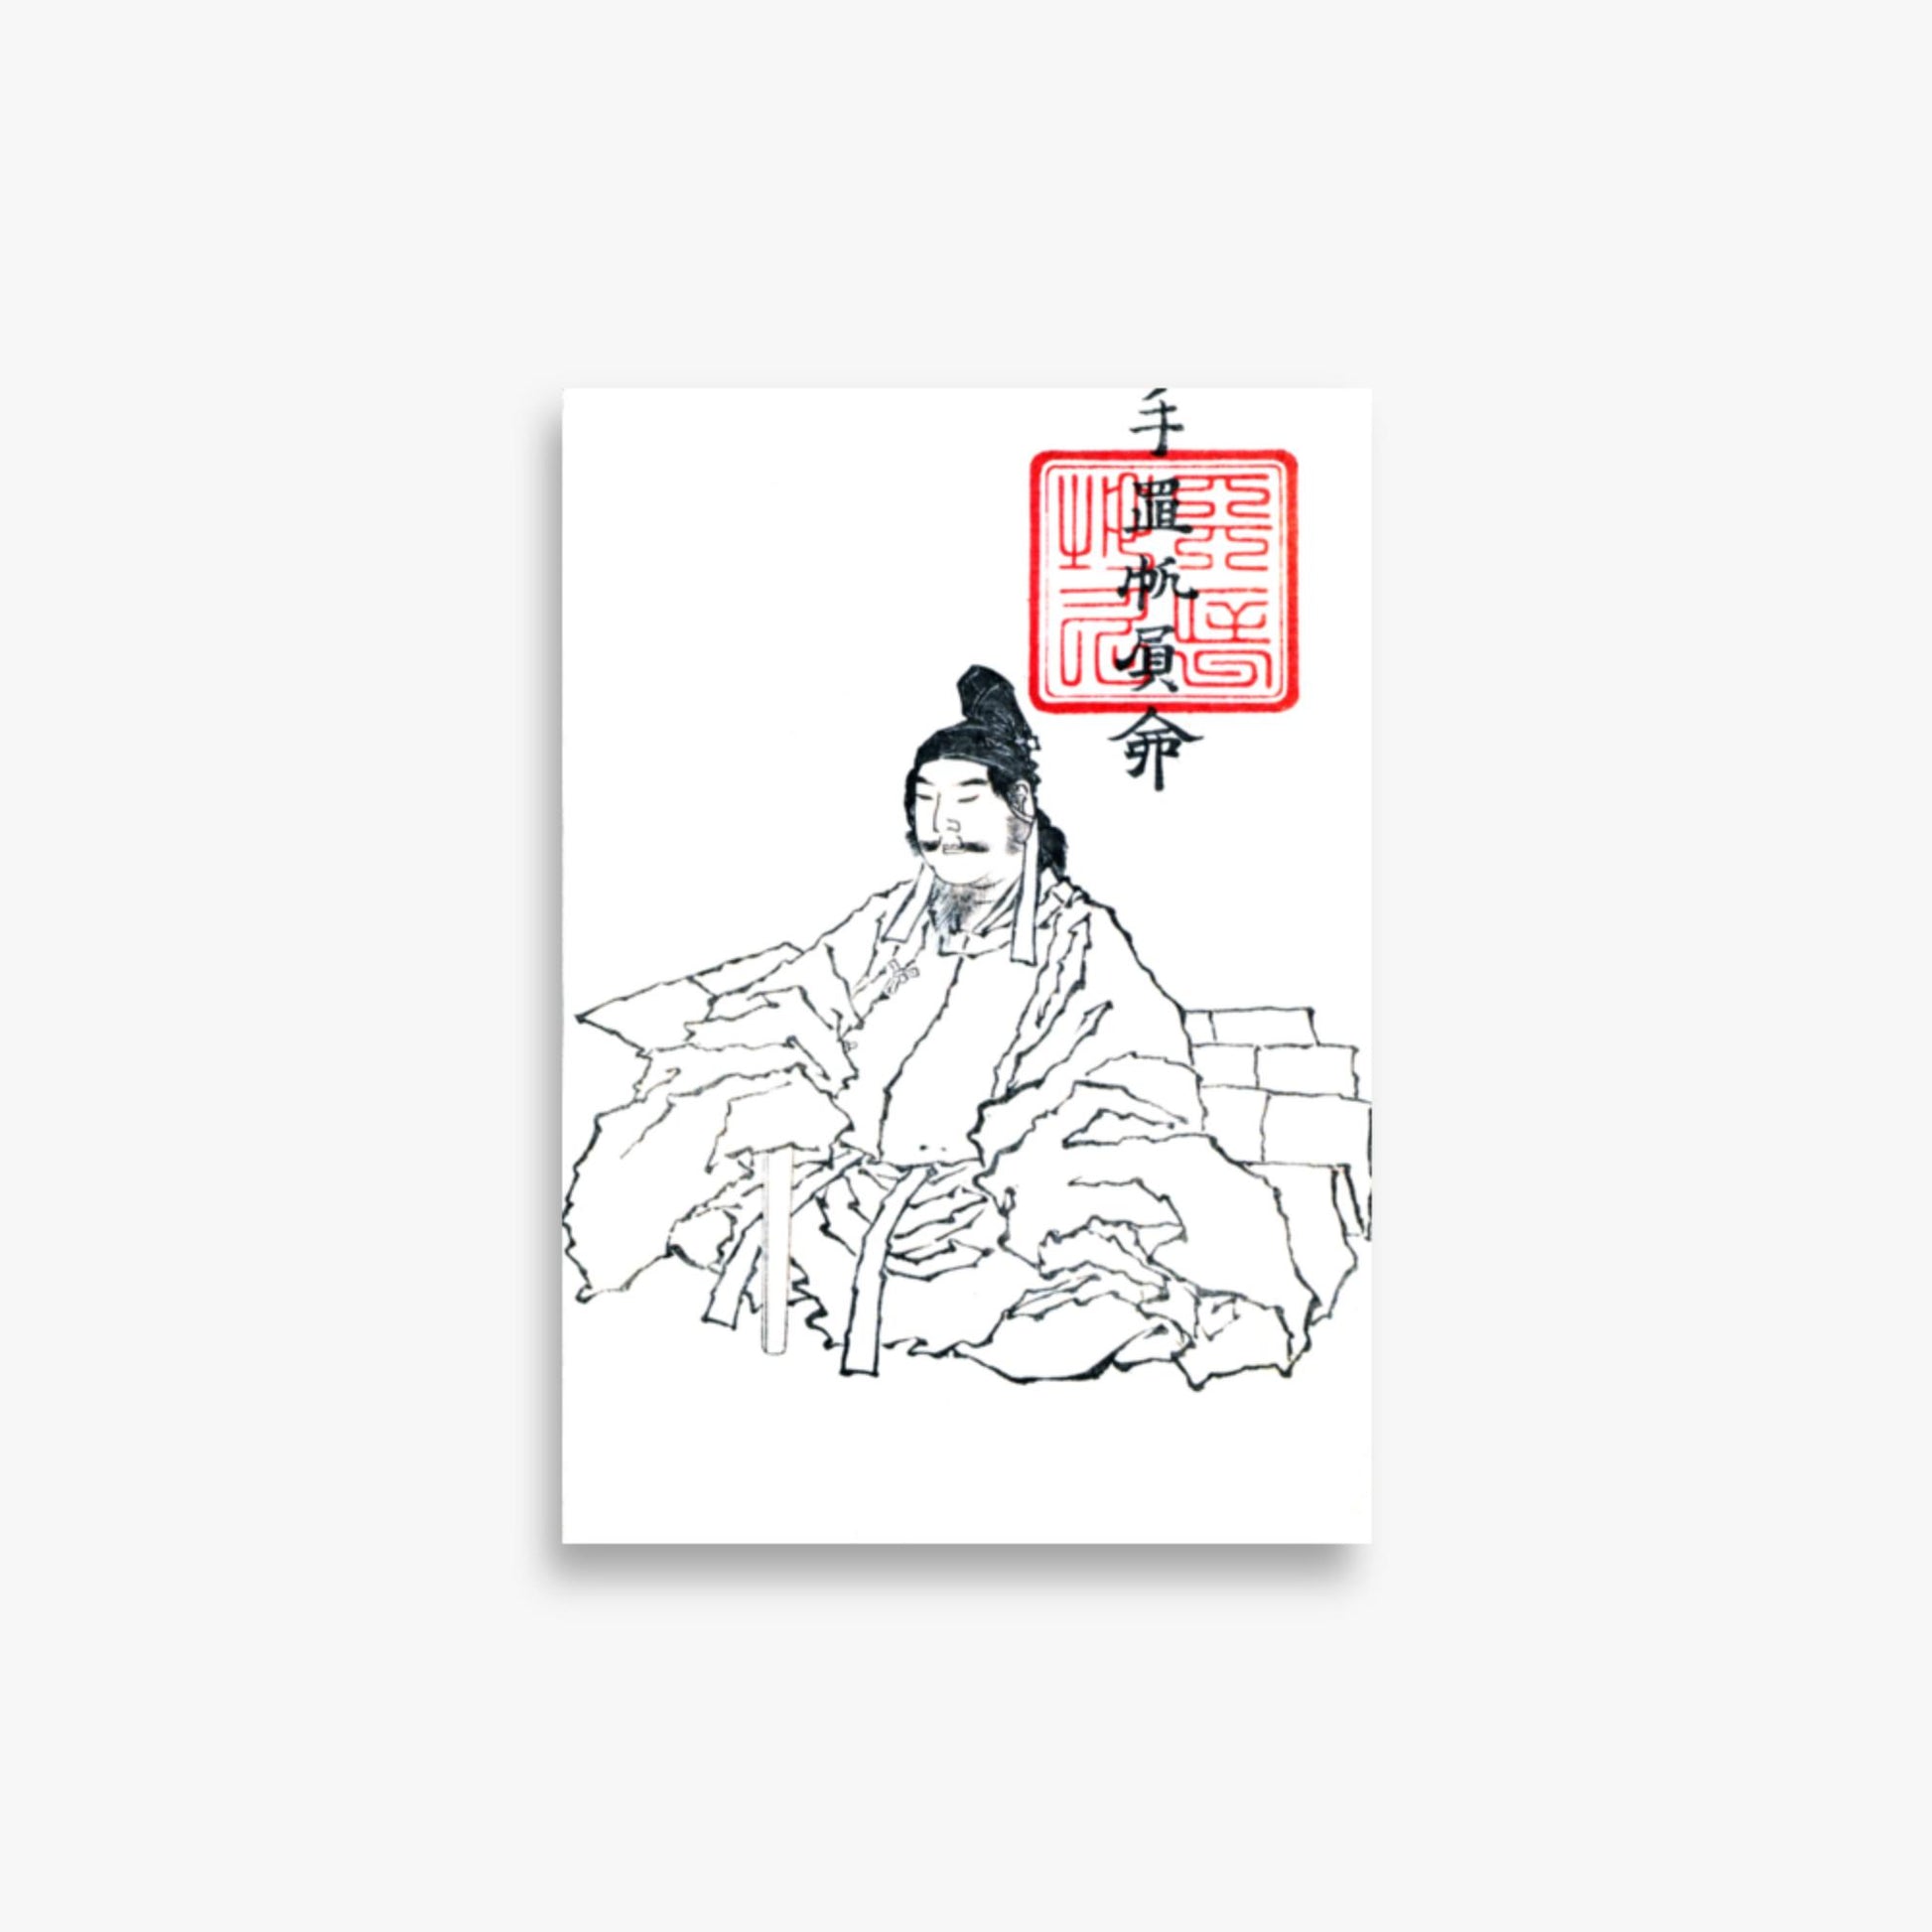 Katsushika Hokusai - Transmitting the Spirit, Revealing the Form of Things: Hokusai Sketchbooks, volume 5 (part) (Denshin kaishu: Hokusai manga, gohen) 21x30 cm Poster